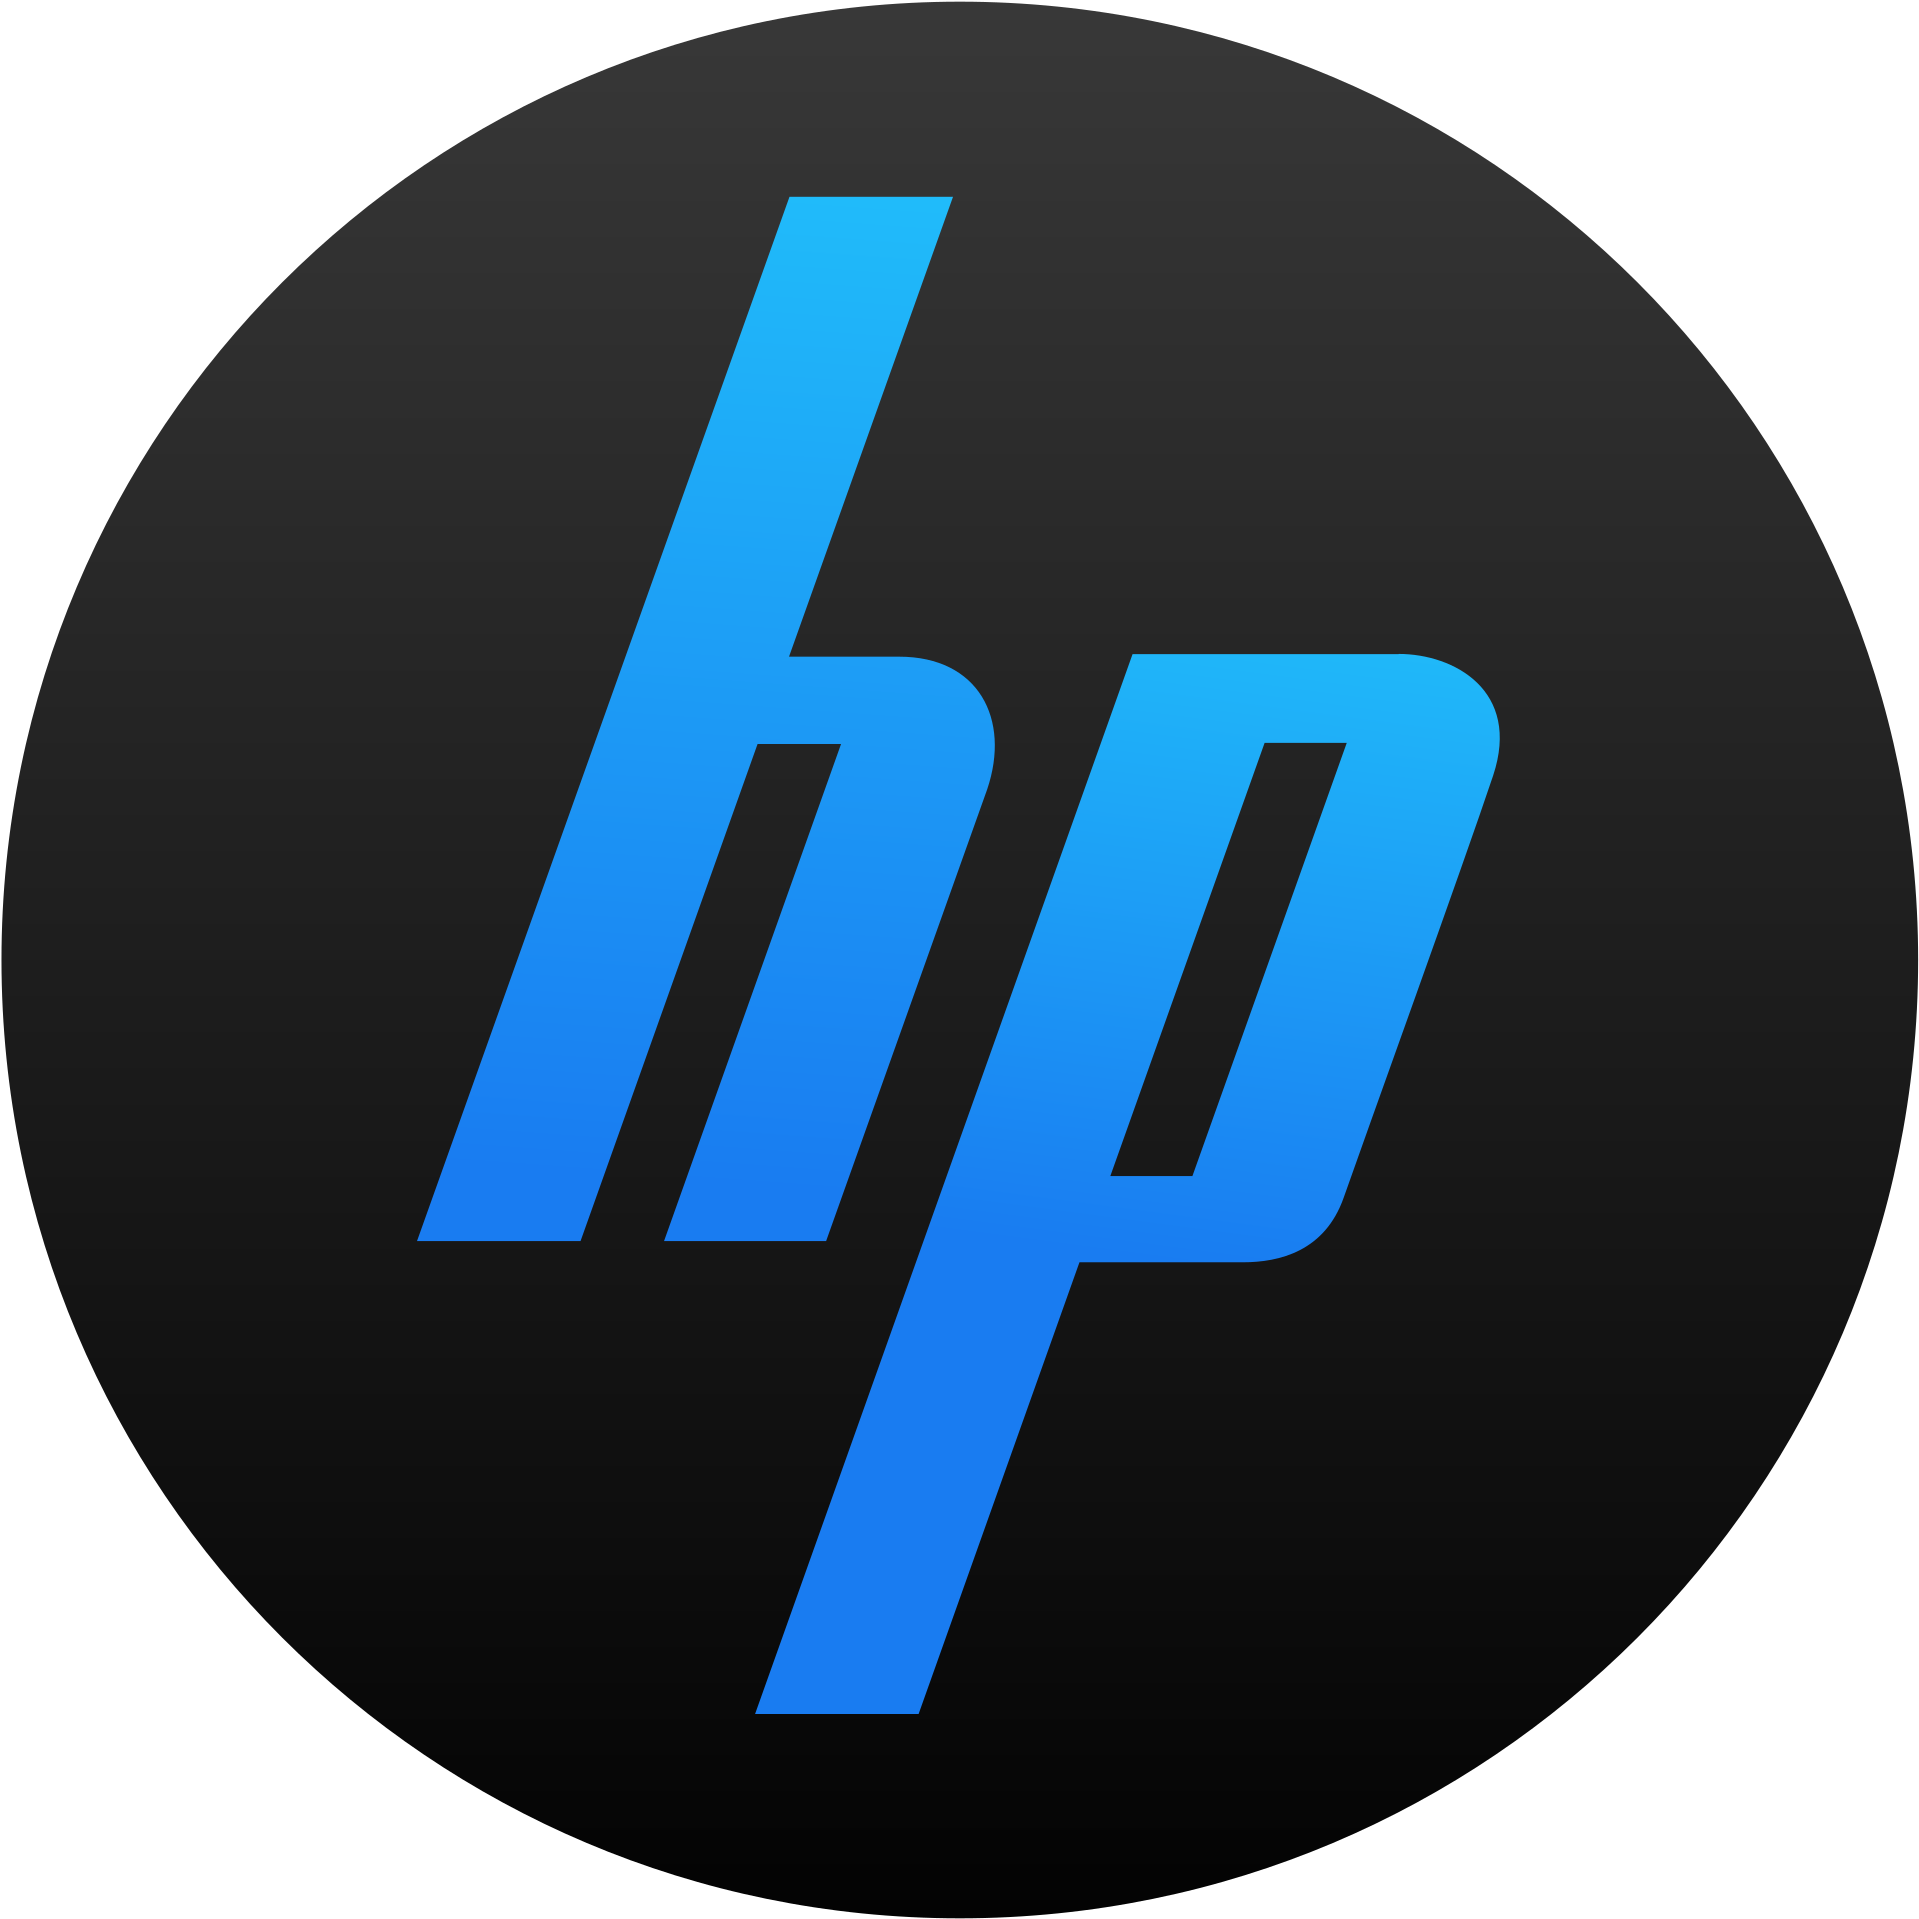 H P Logo Blueon Black Background